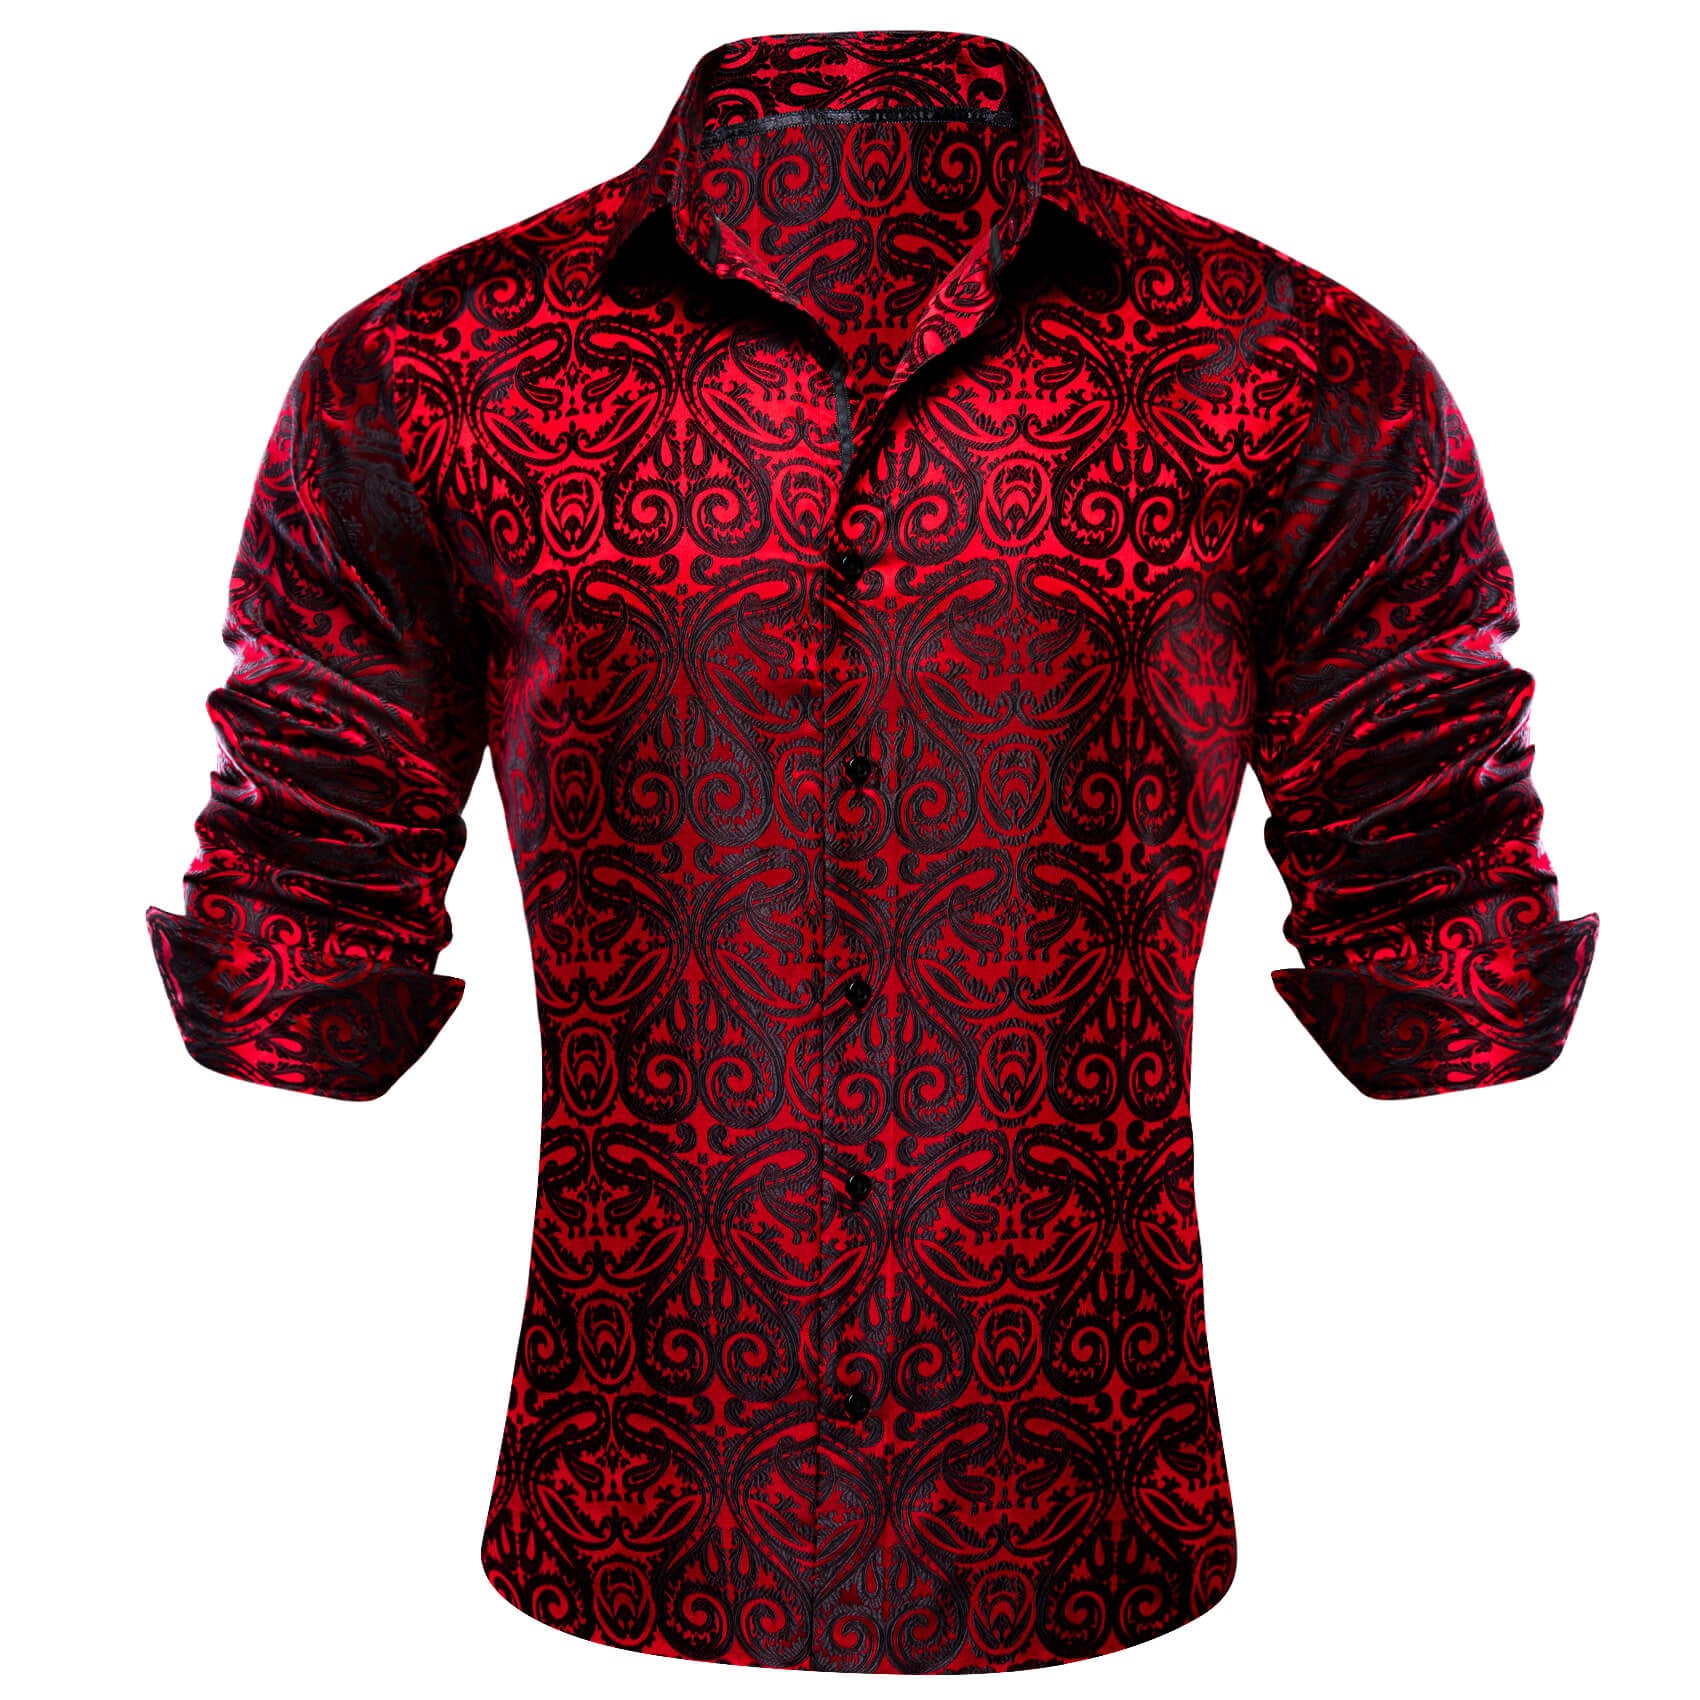 Barry.wang Men's Shirt Red Black Woven Paisley Silk Long Sleeve Shirt Classic